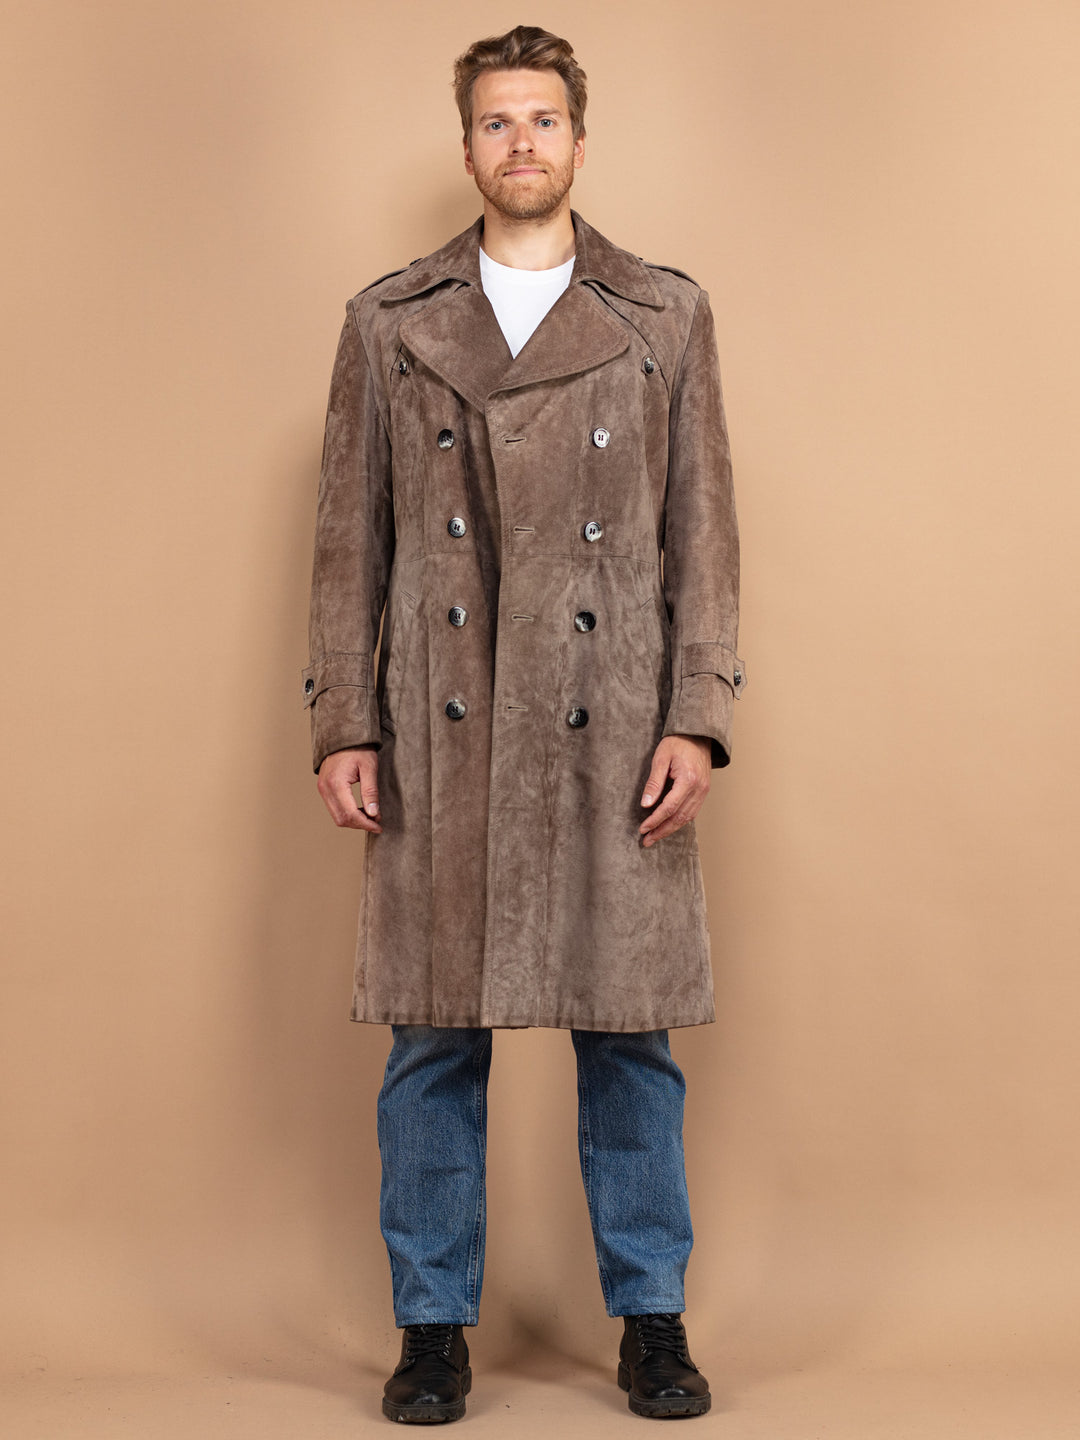 Brown Suede Coat 70's, Size Large XL, Vintage Trench Style Coat, Suede Coat Men, Minimalist Sleek Retro Coat, Western Coat, Vintage Clothing